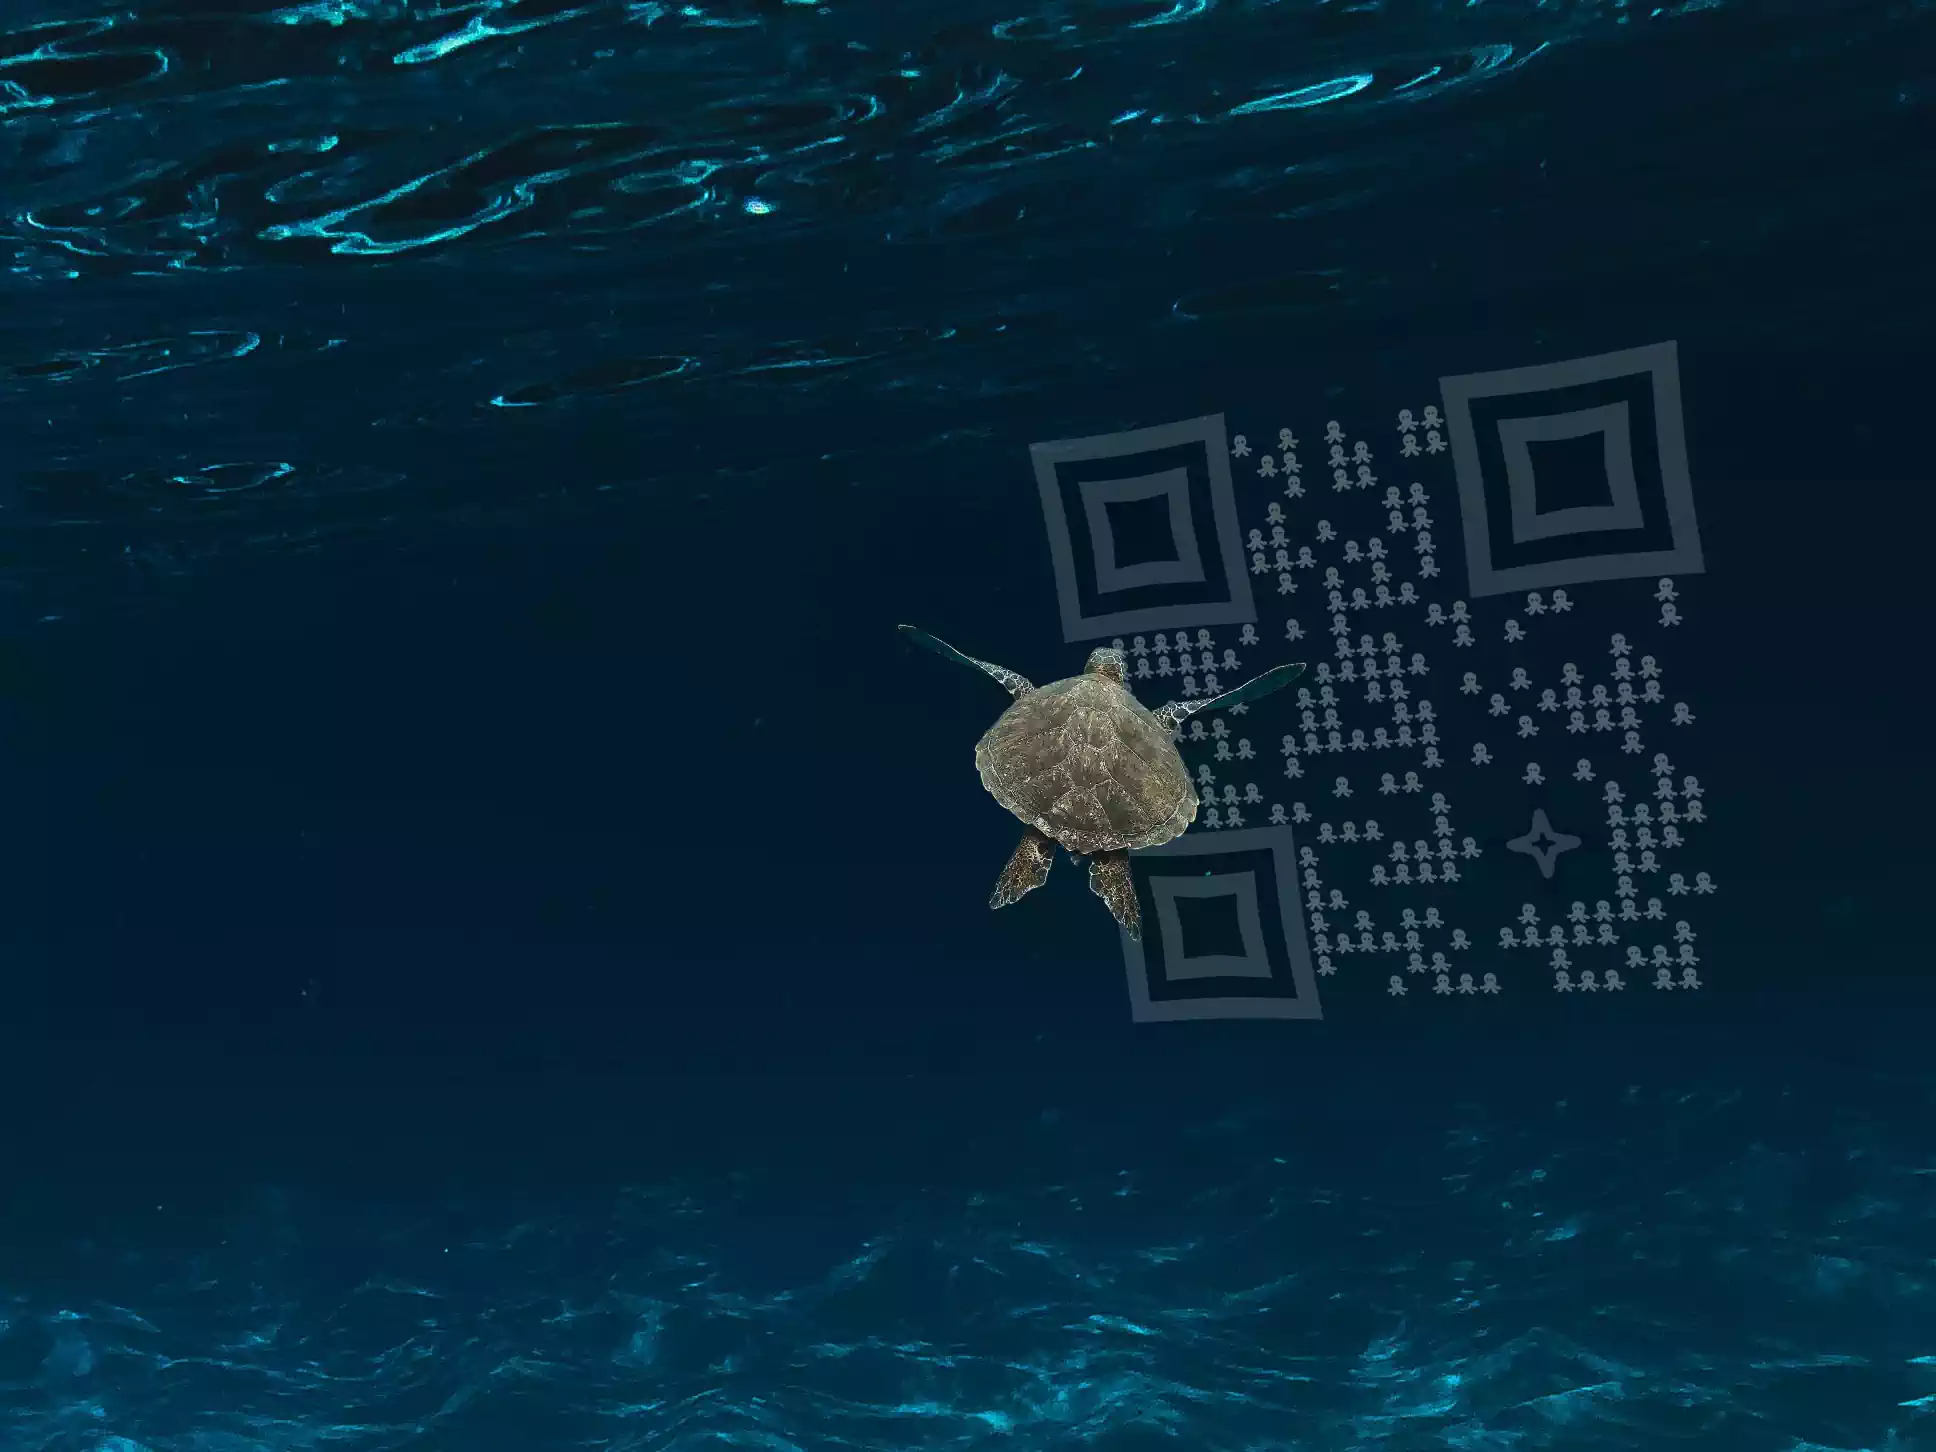 QRcodeLab qr generator and image editor - underwater qr image with sea turtle logo